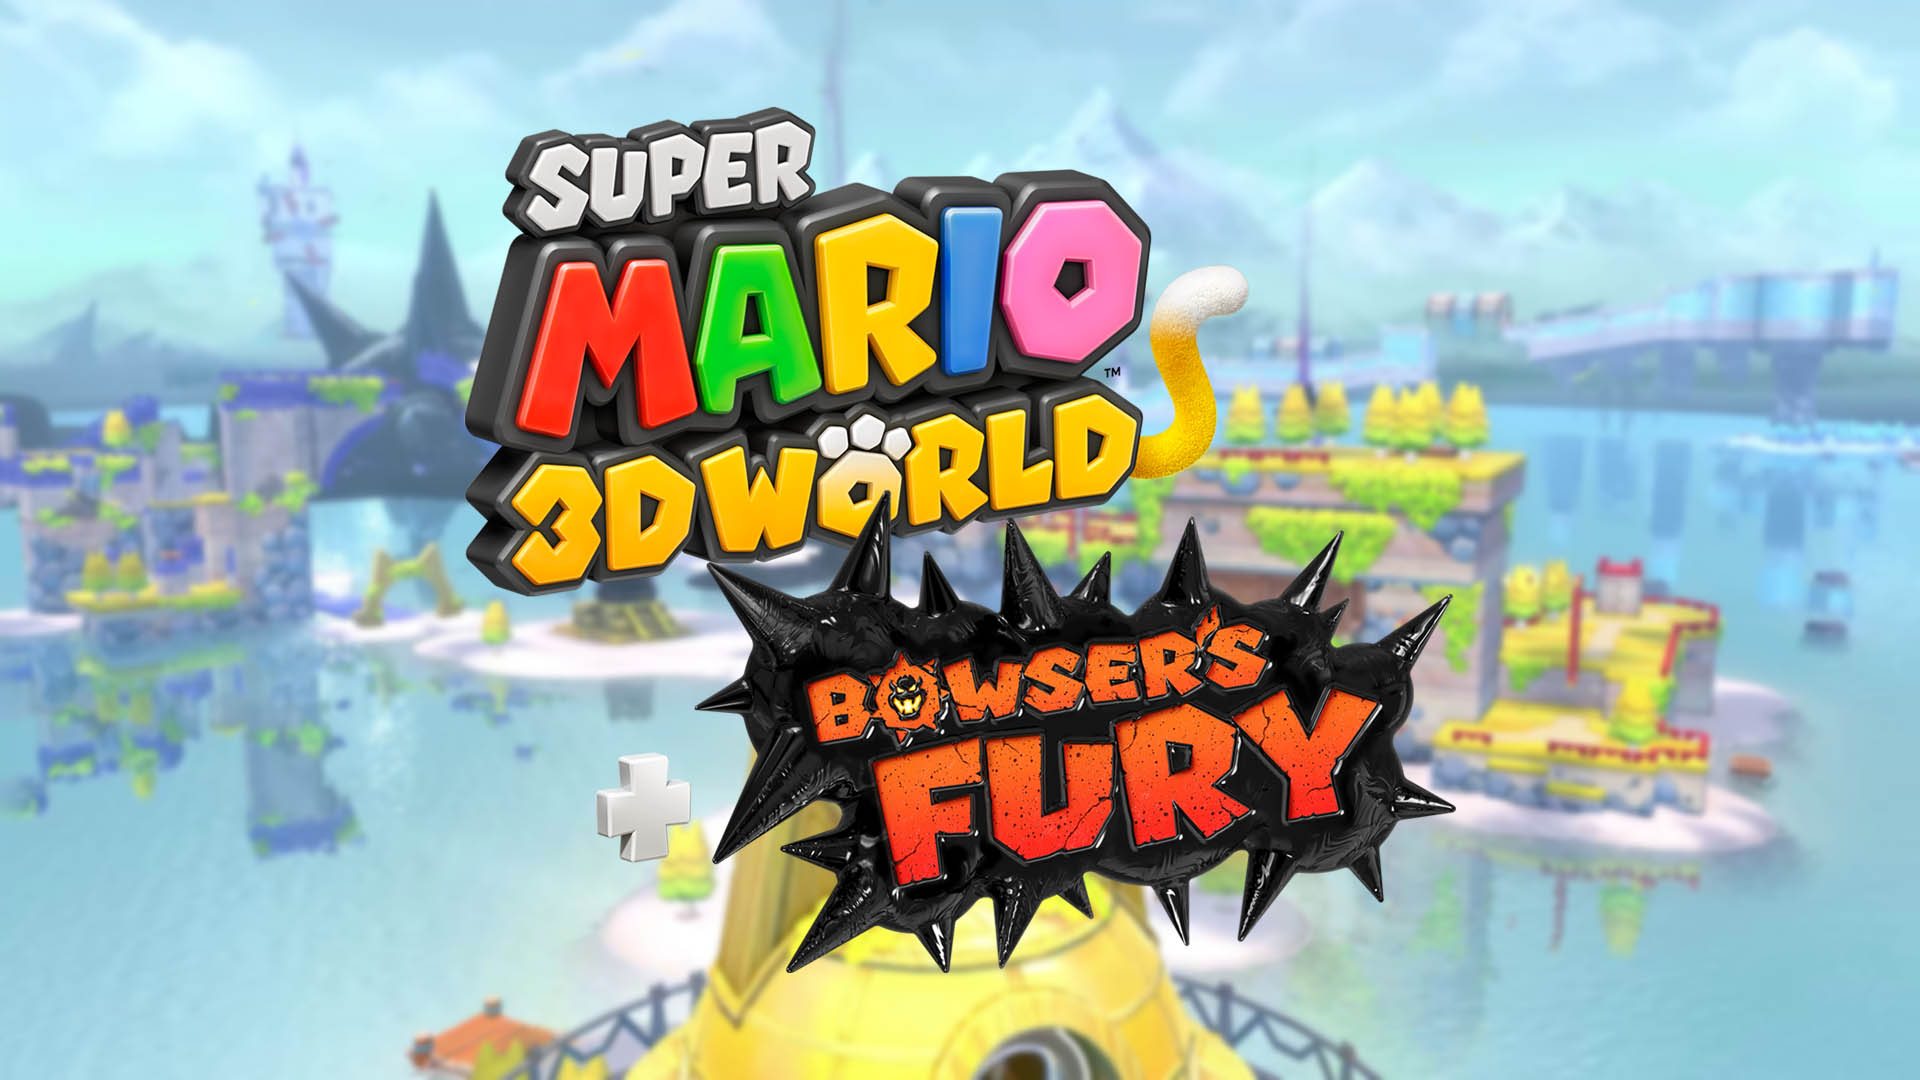 Super Mario 3D World Online Multiplayer Footage Released